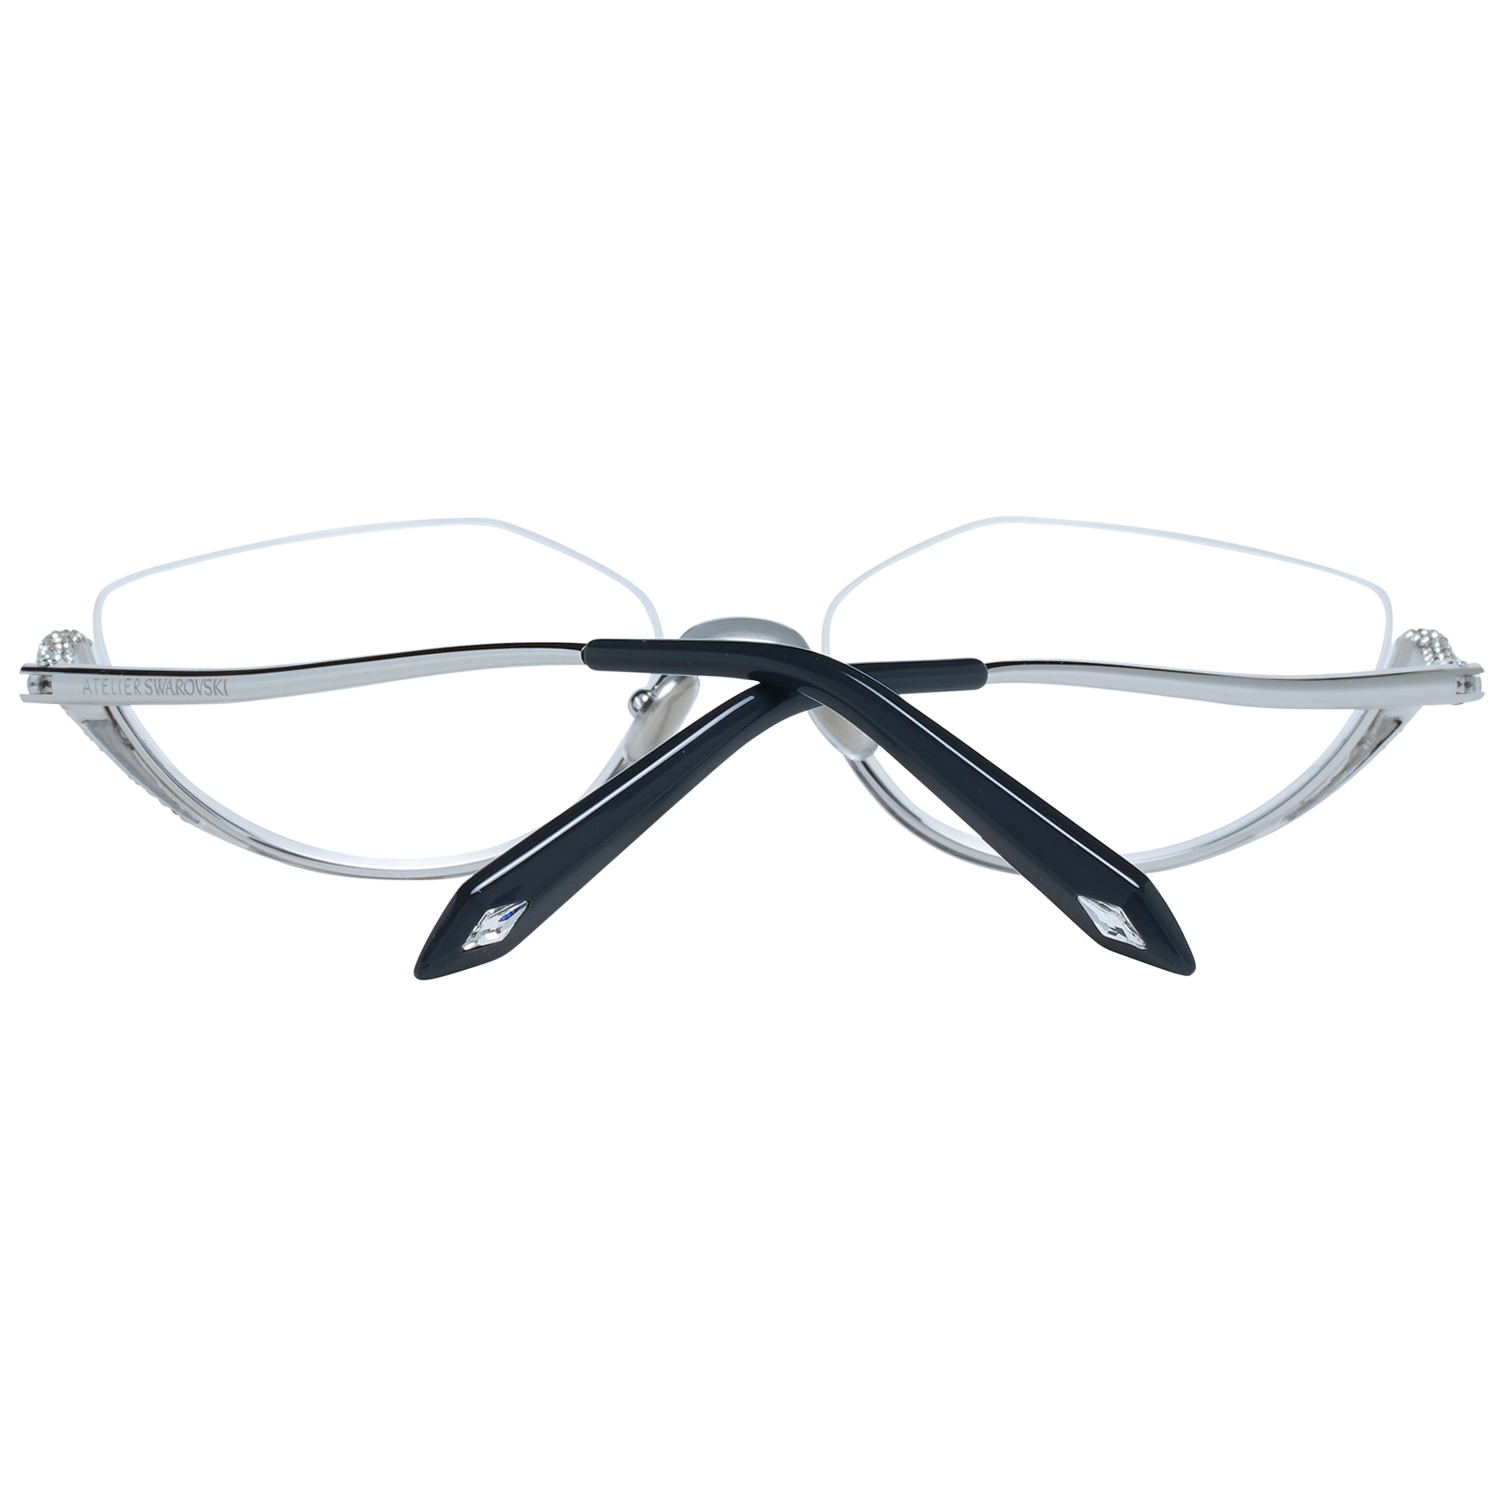 Atelier Swarovski Frames Atelier Swarovski Glasses Optical Frame SK5359-P 56 016 Eyeglasses Eyewear UK USA Australia 